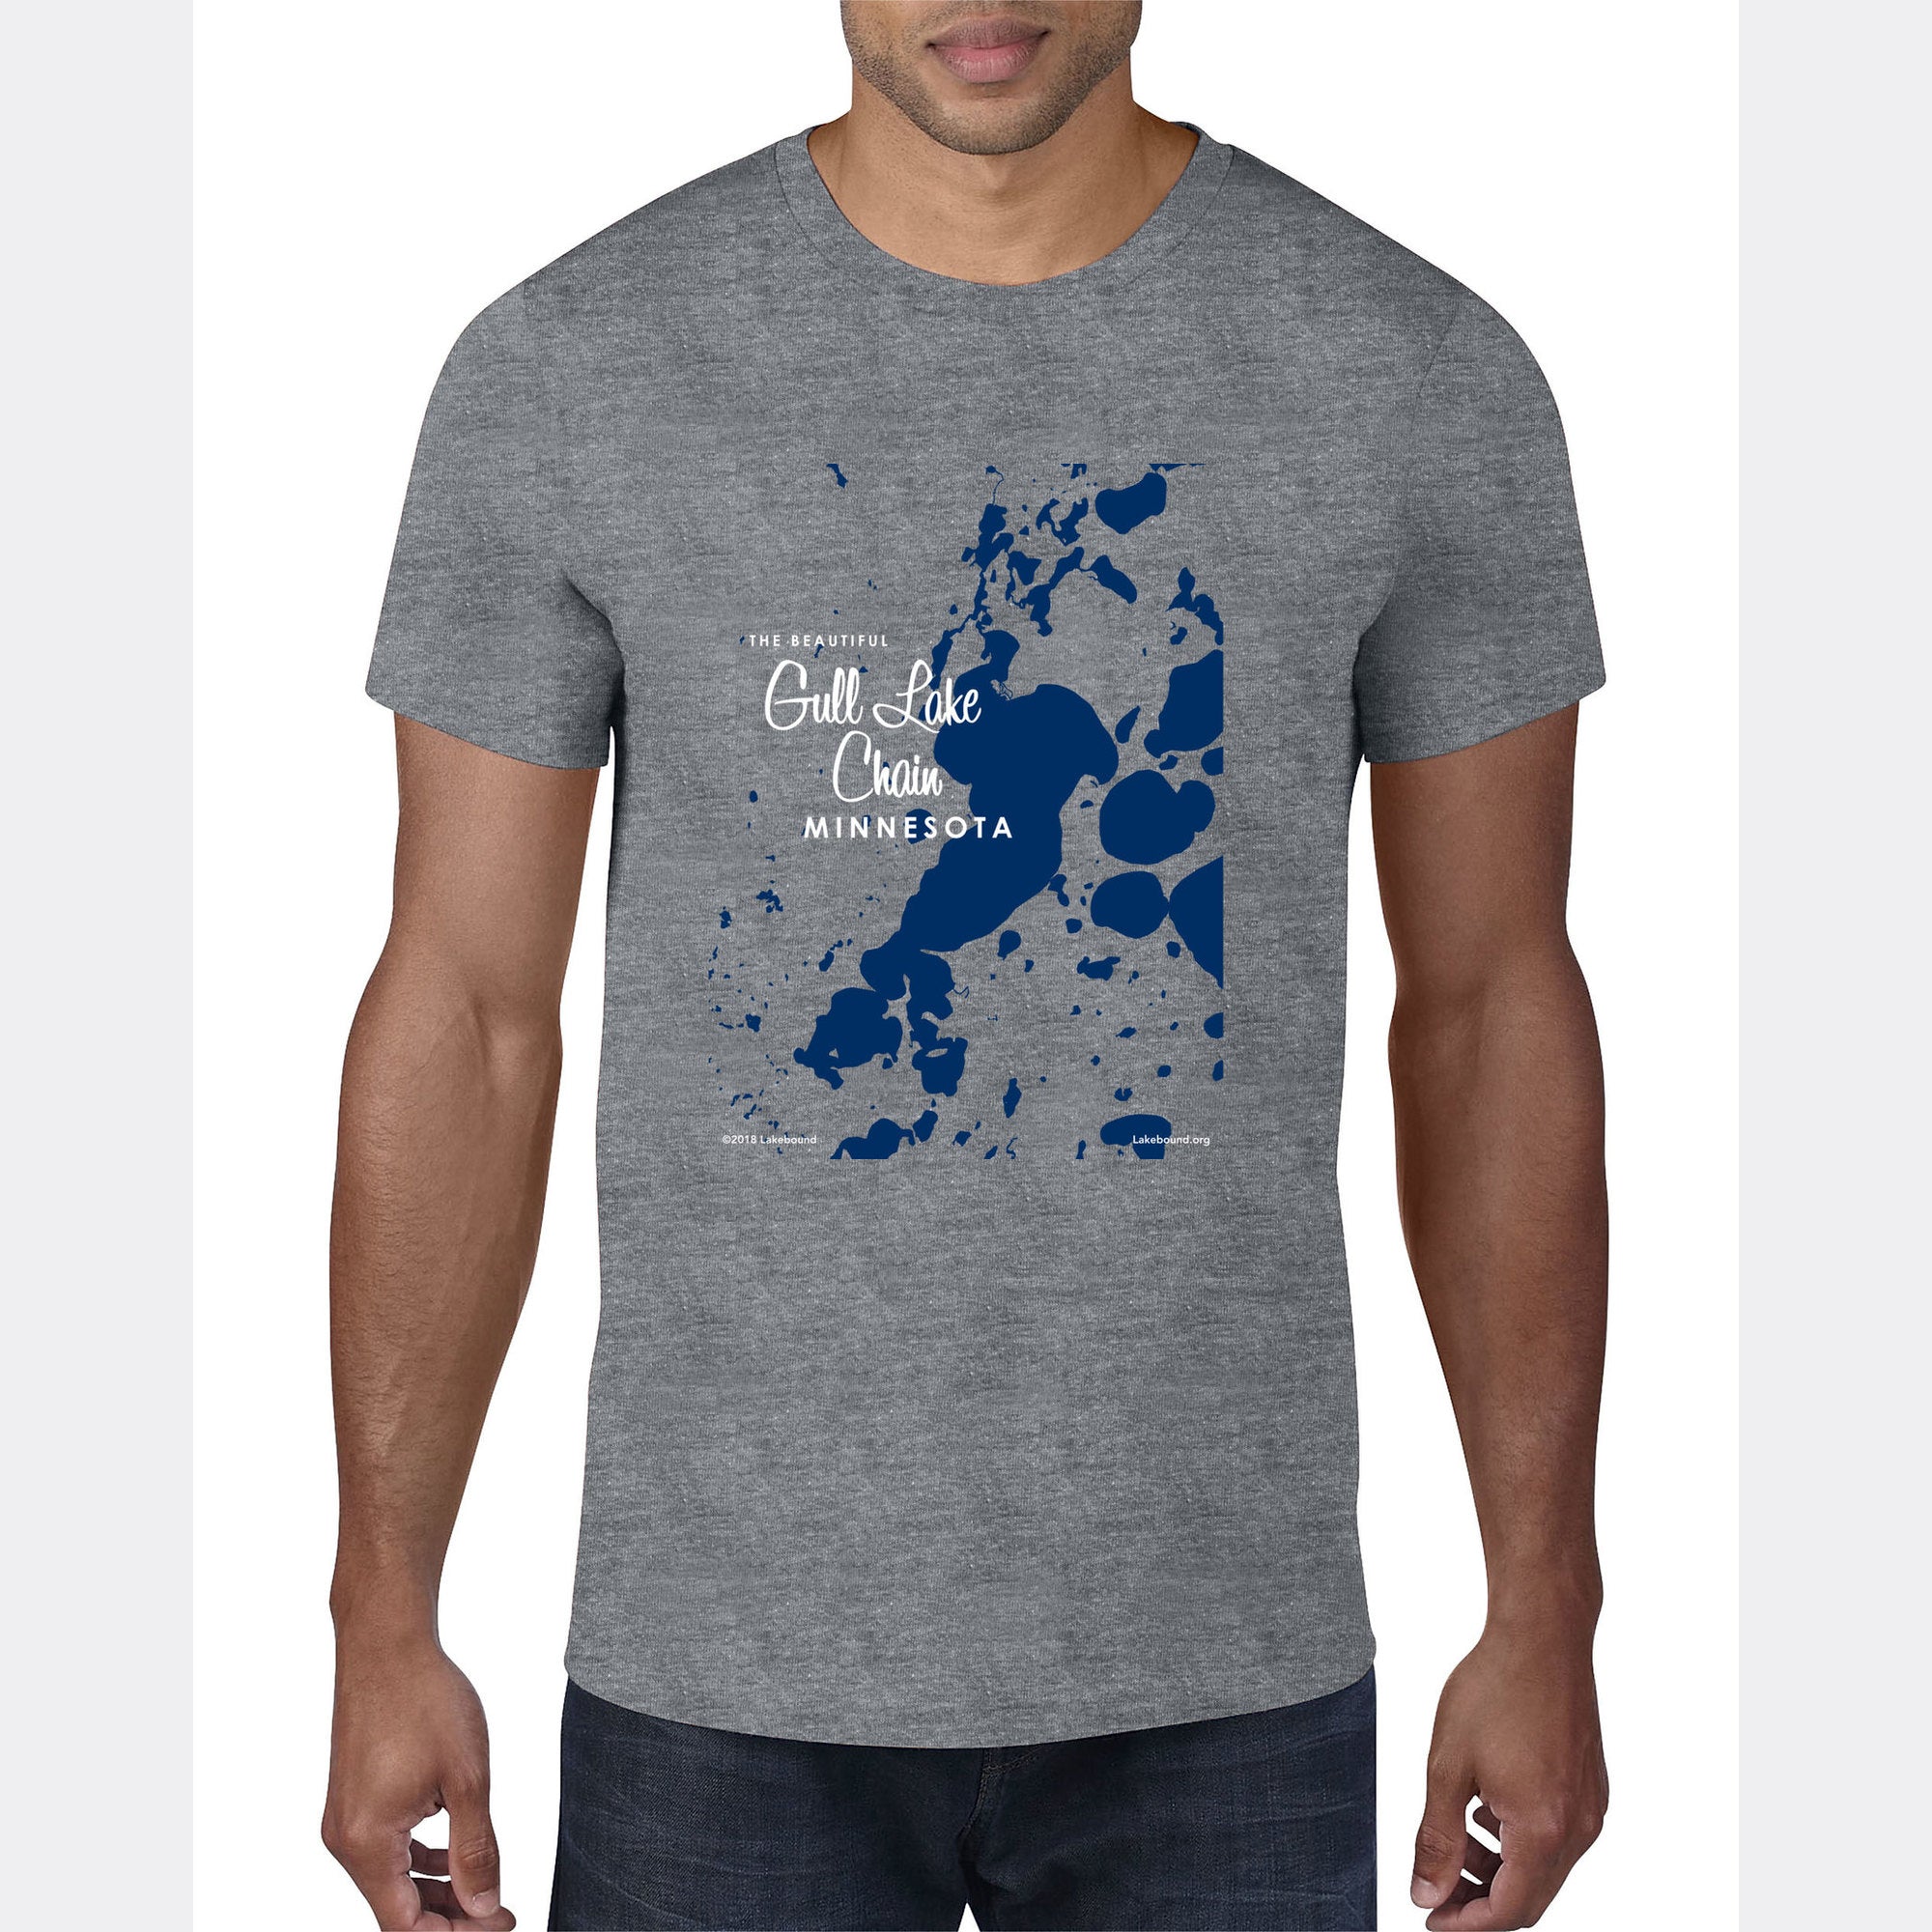 Gull Lake Chain Minnesota, T-Shirt